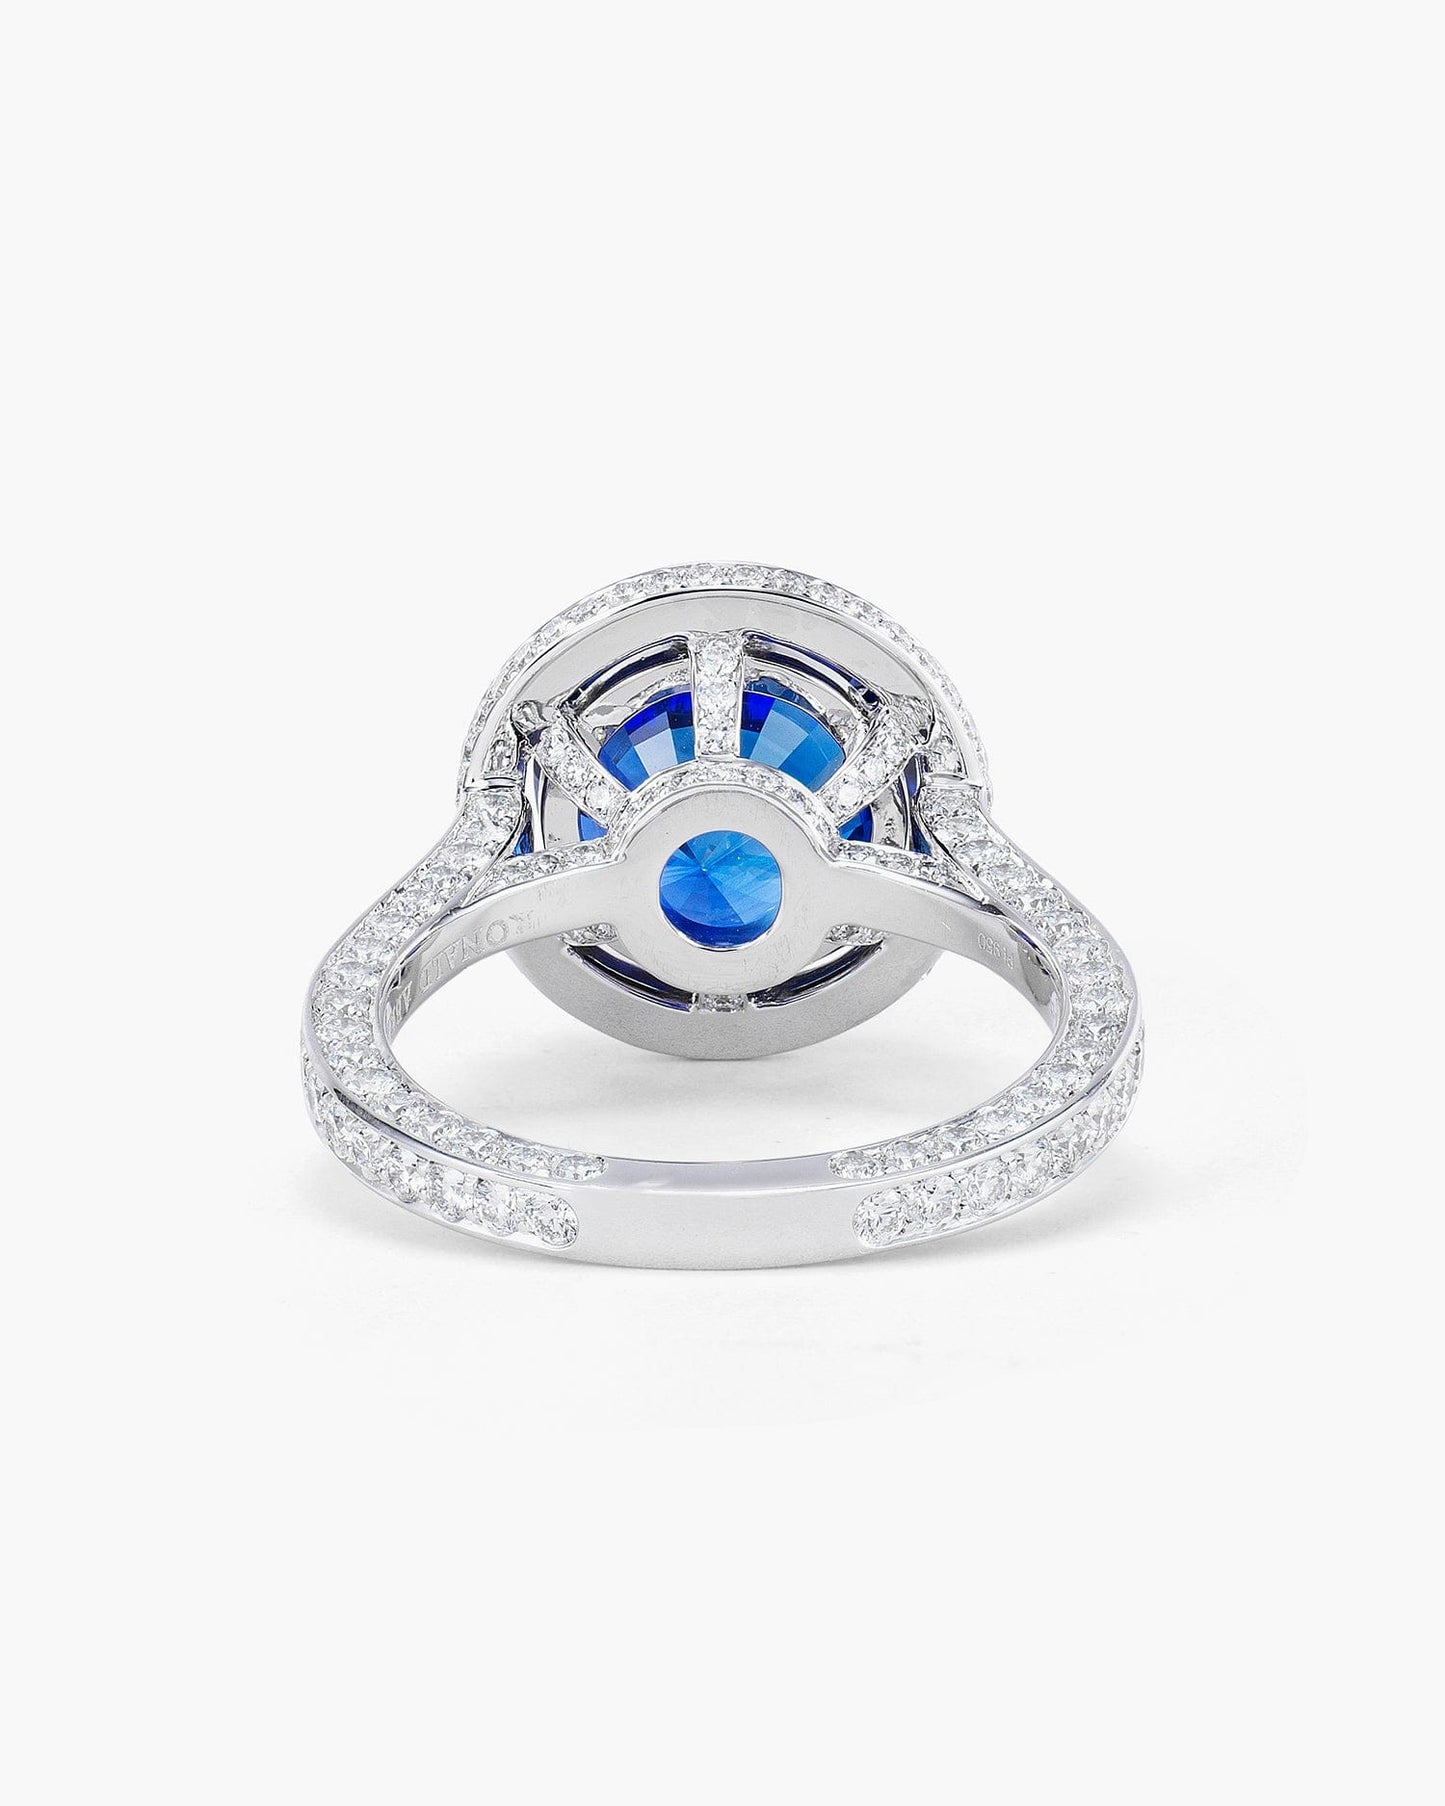 5.06 carat Round Cut Madagascar Sapphire and Diamond Ring